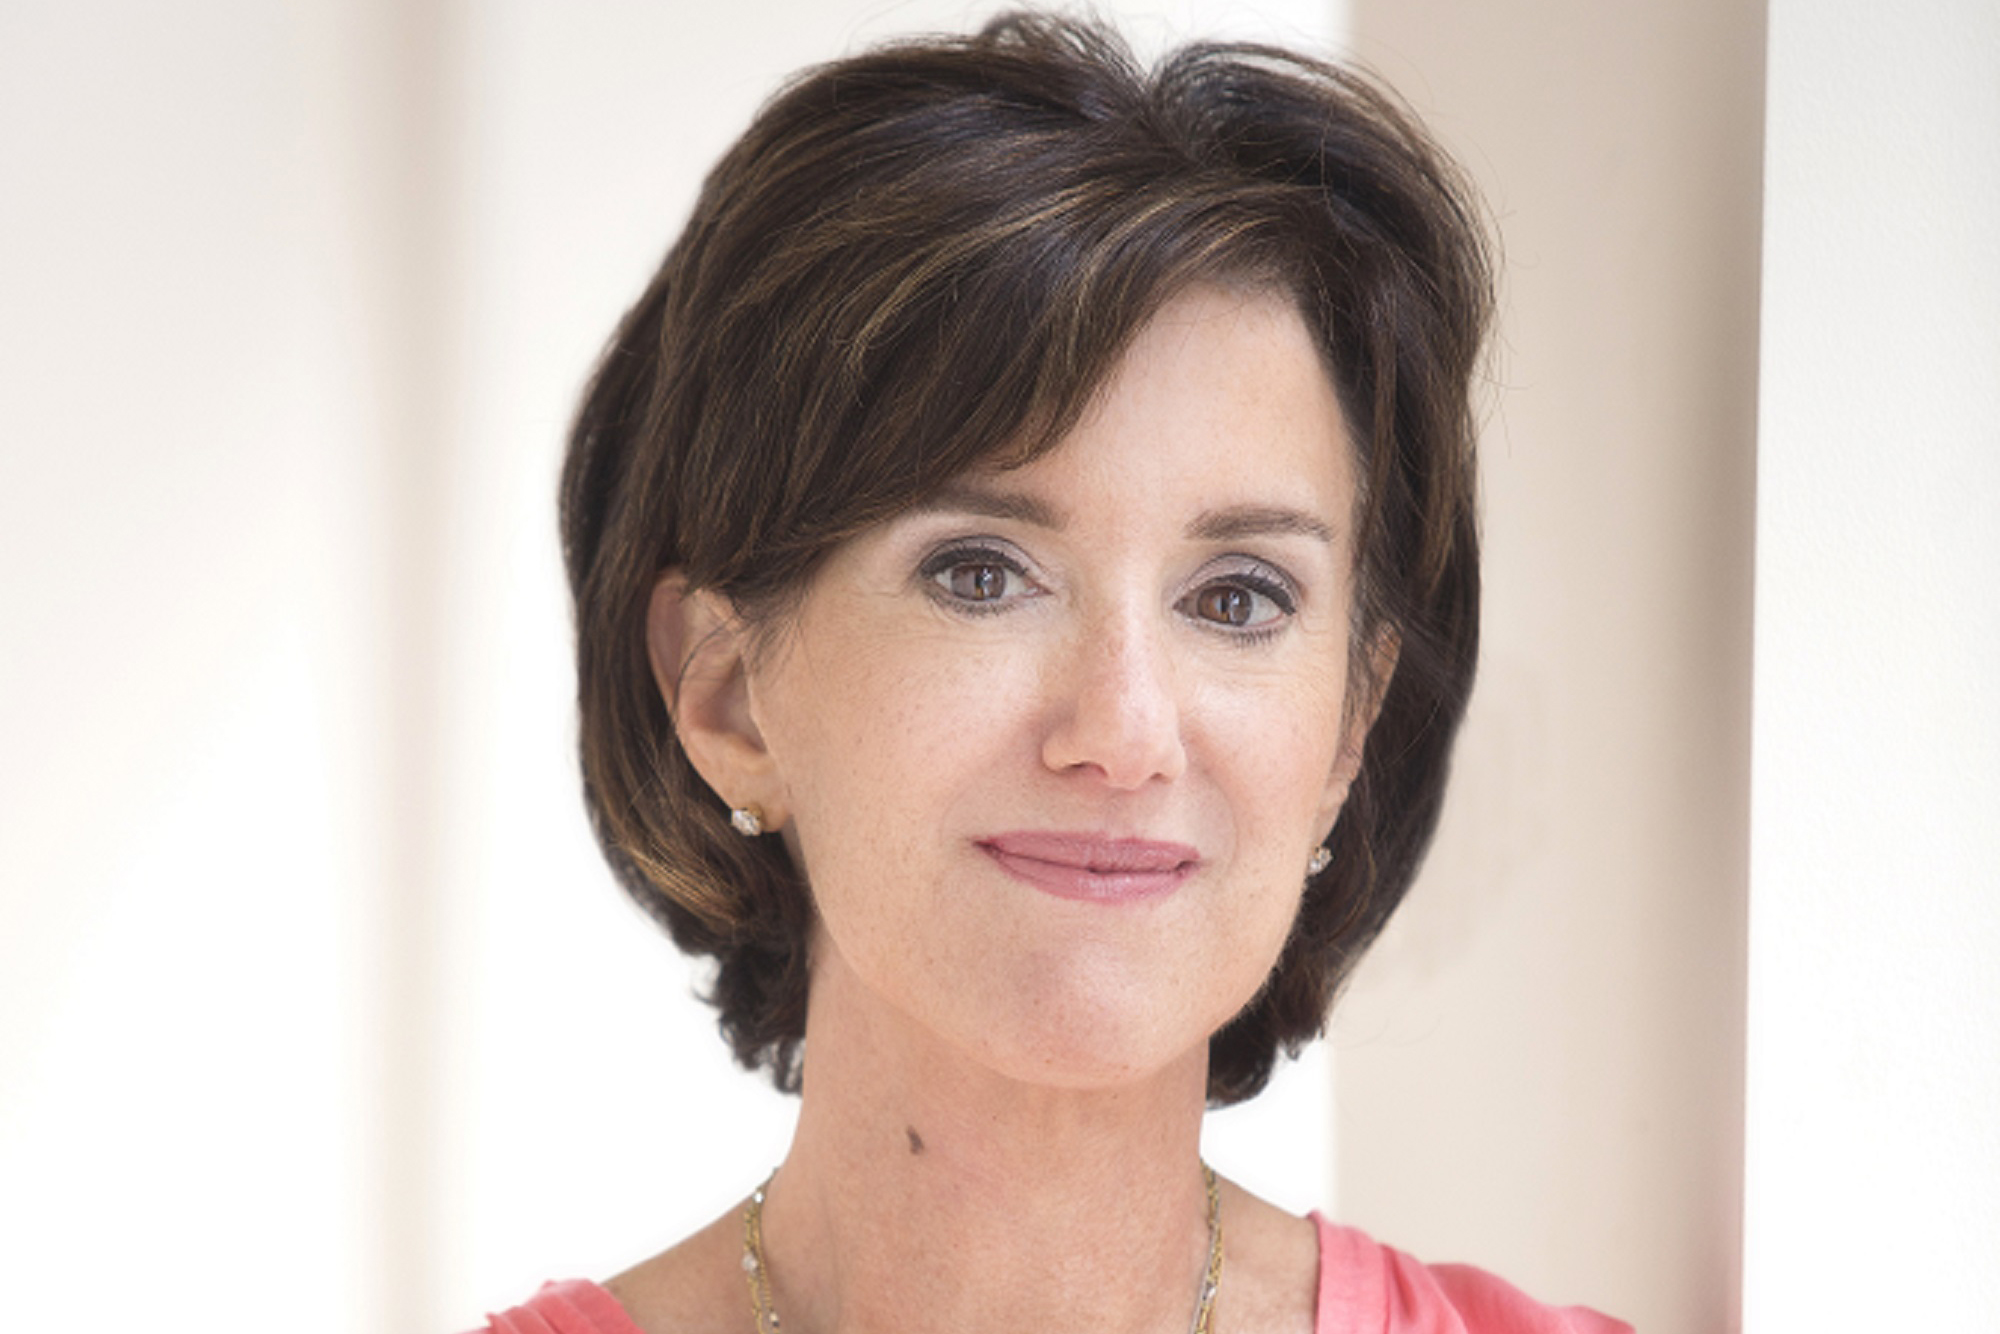 Susan Packard, former HGTV CEO, smiling against tan backdrop